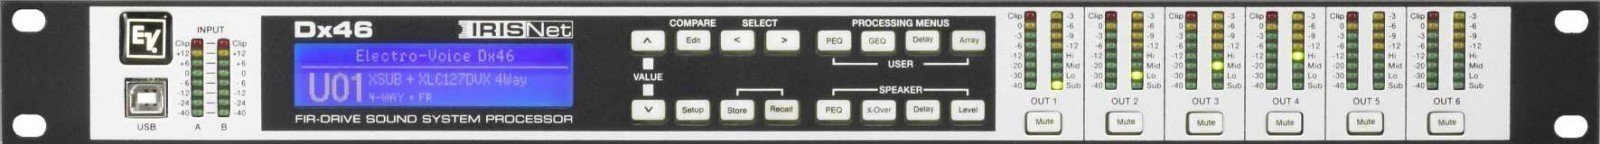 Signal Processor Electro Voice DX 46